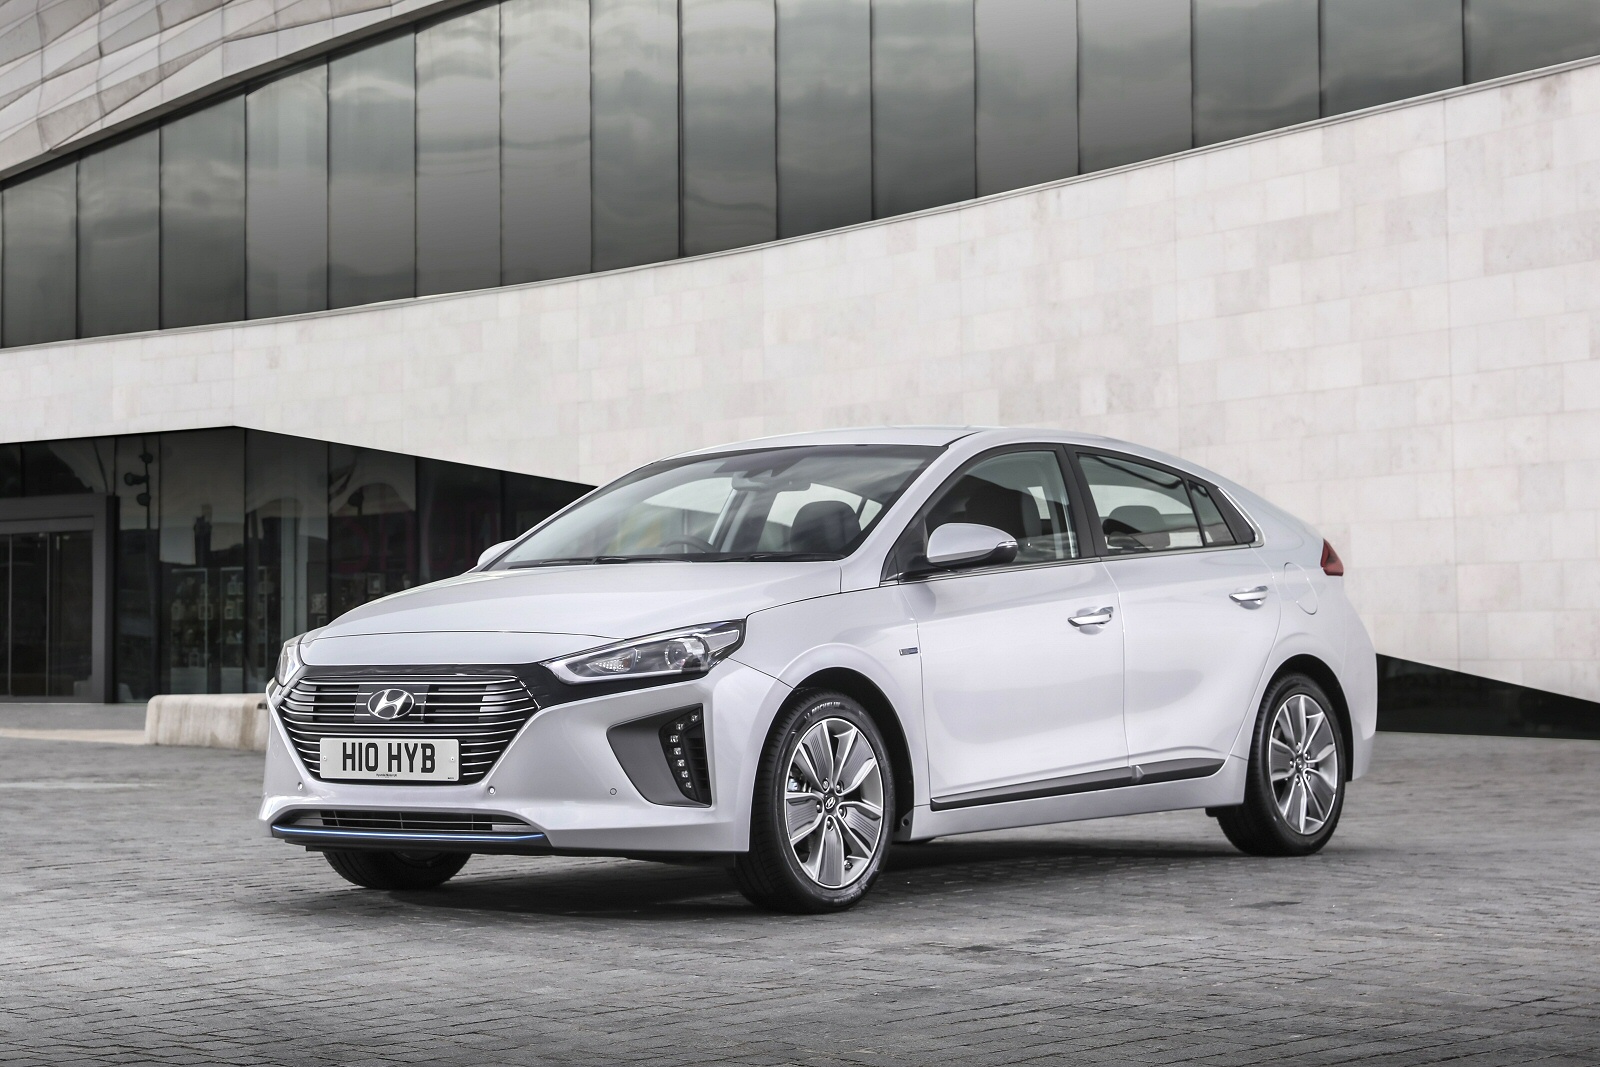 Hyundai Ioniq Electric Vs Renault Zoe Vs Nissan Leaf: Review & Comparisons